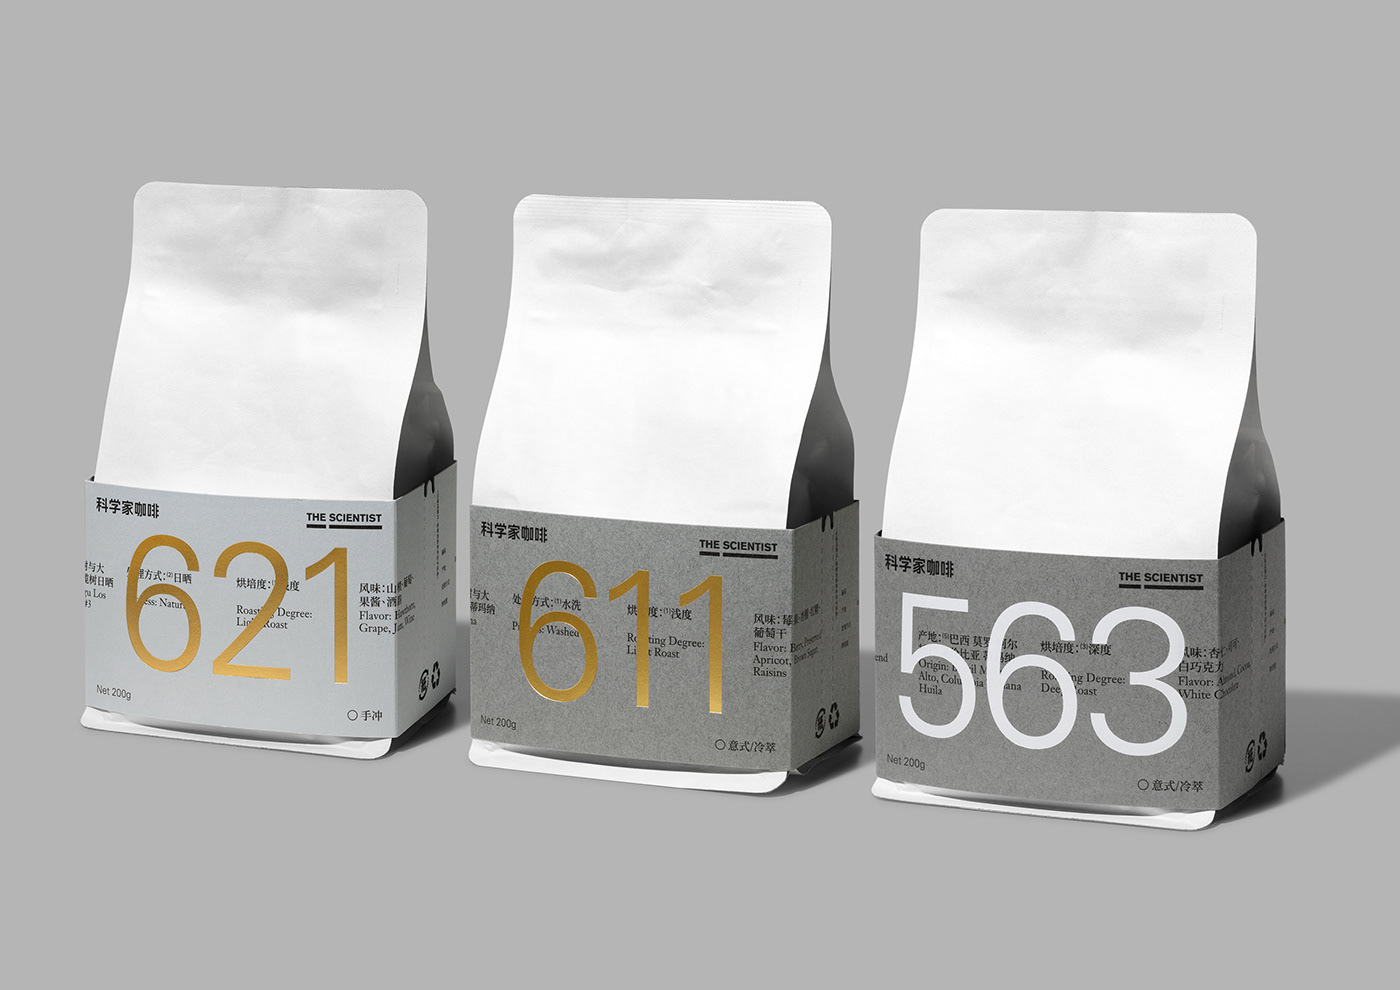 Packaging example #412: T.S's Coffee Bean Packaging ????????